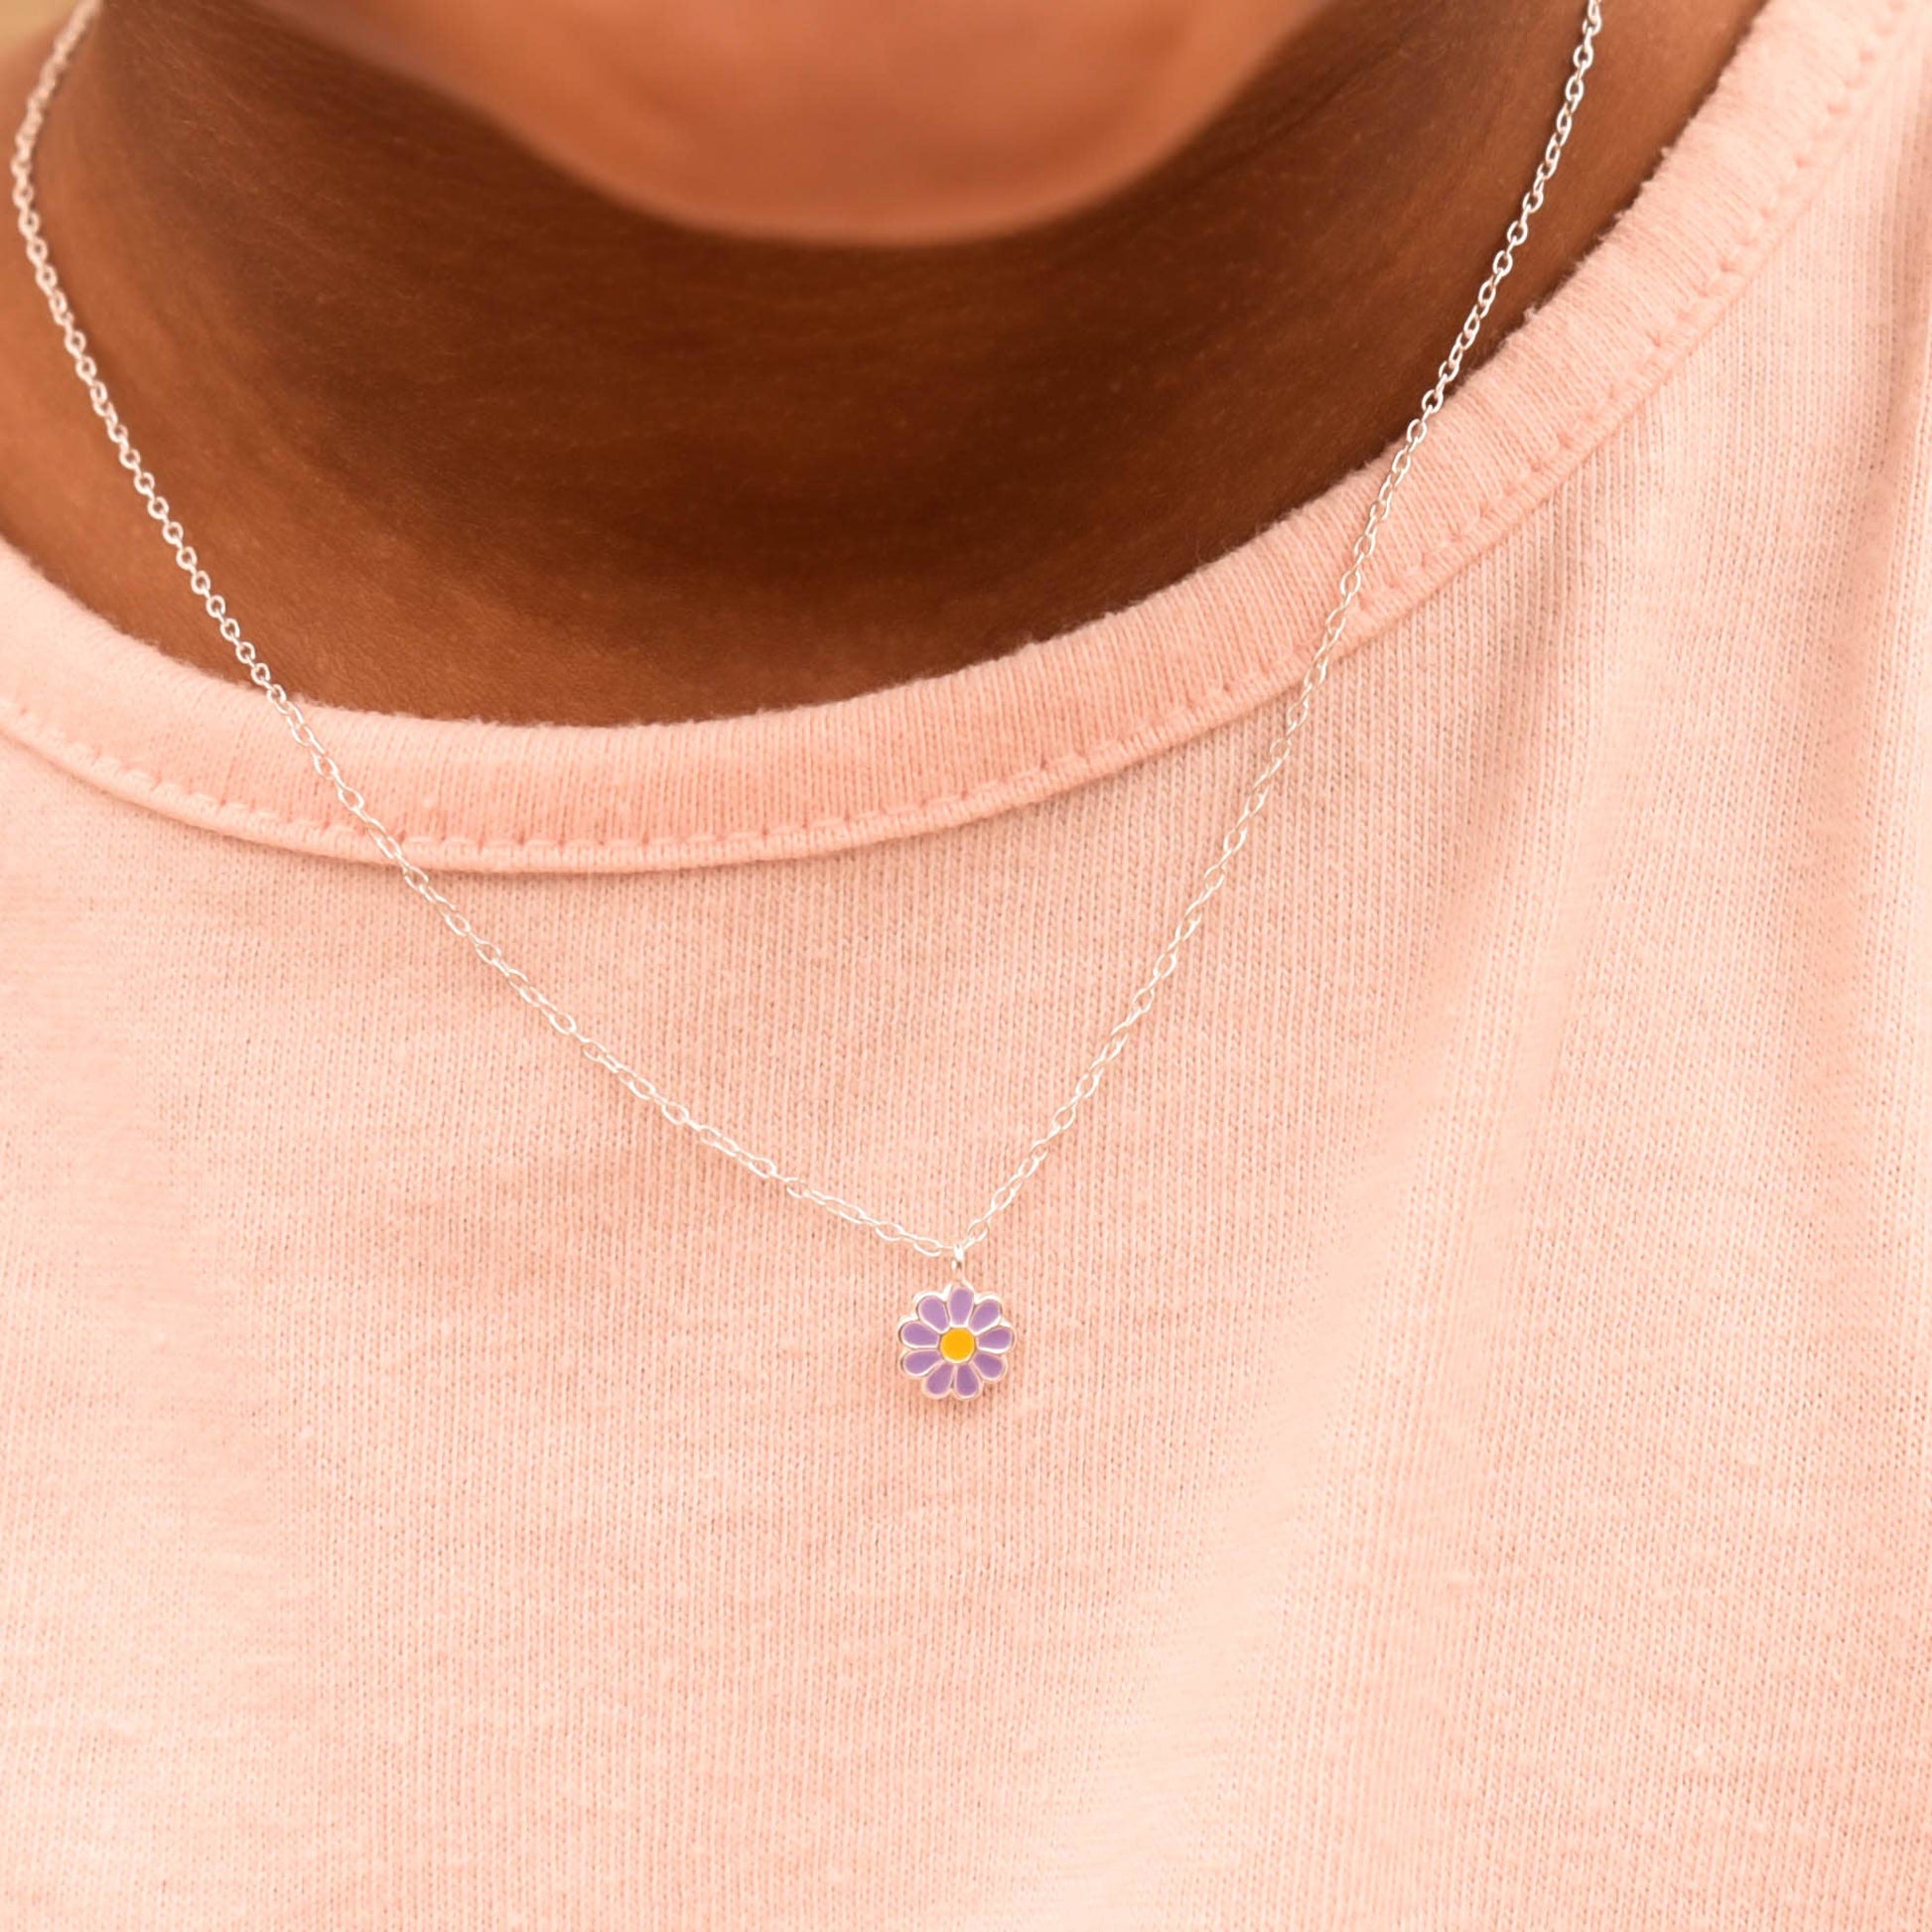 Girls Purple Flower Sterling Necklace Spring-Summer Pecan Creek Designs